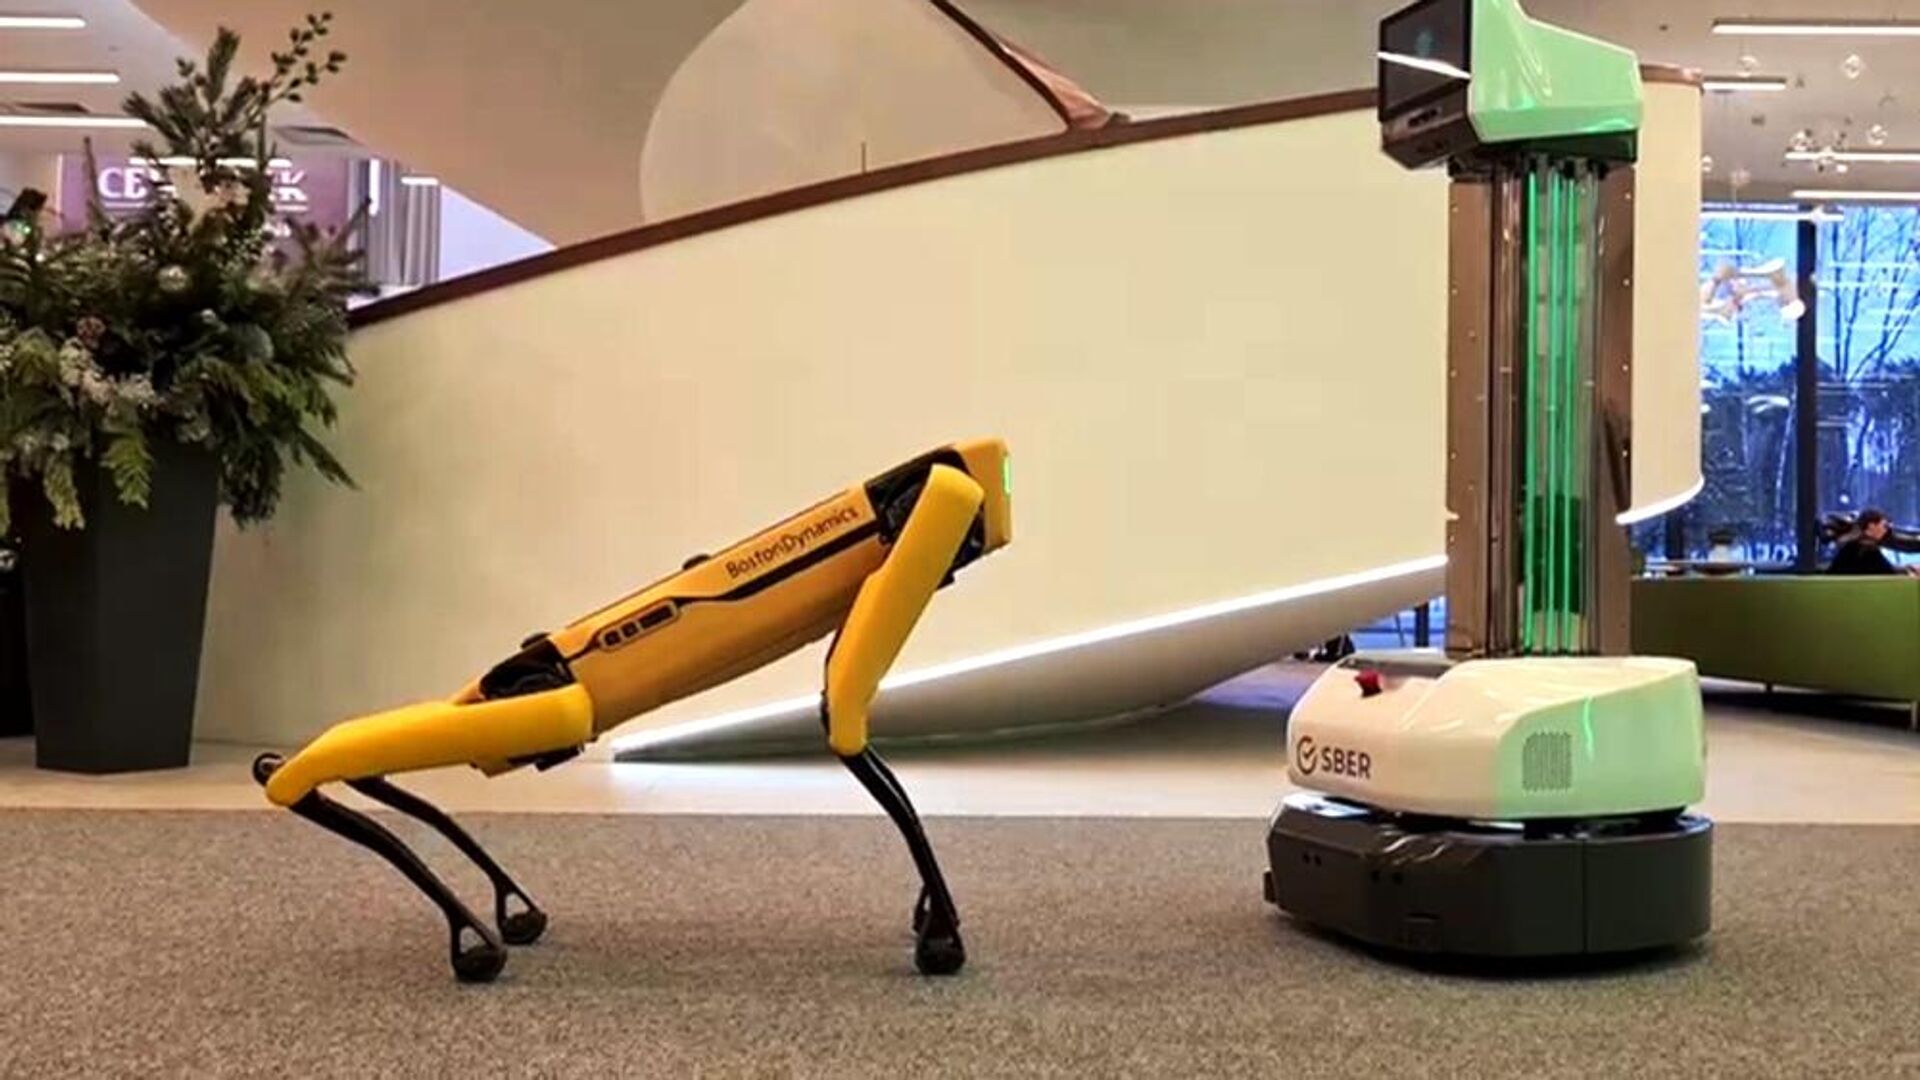 Робот-собака от Boston Dynamics, которого приобрел Сбер - РИА Новости, 1920, 08.04.2021